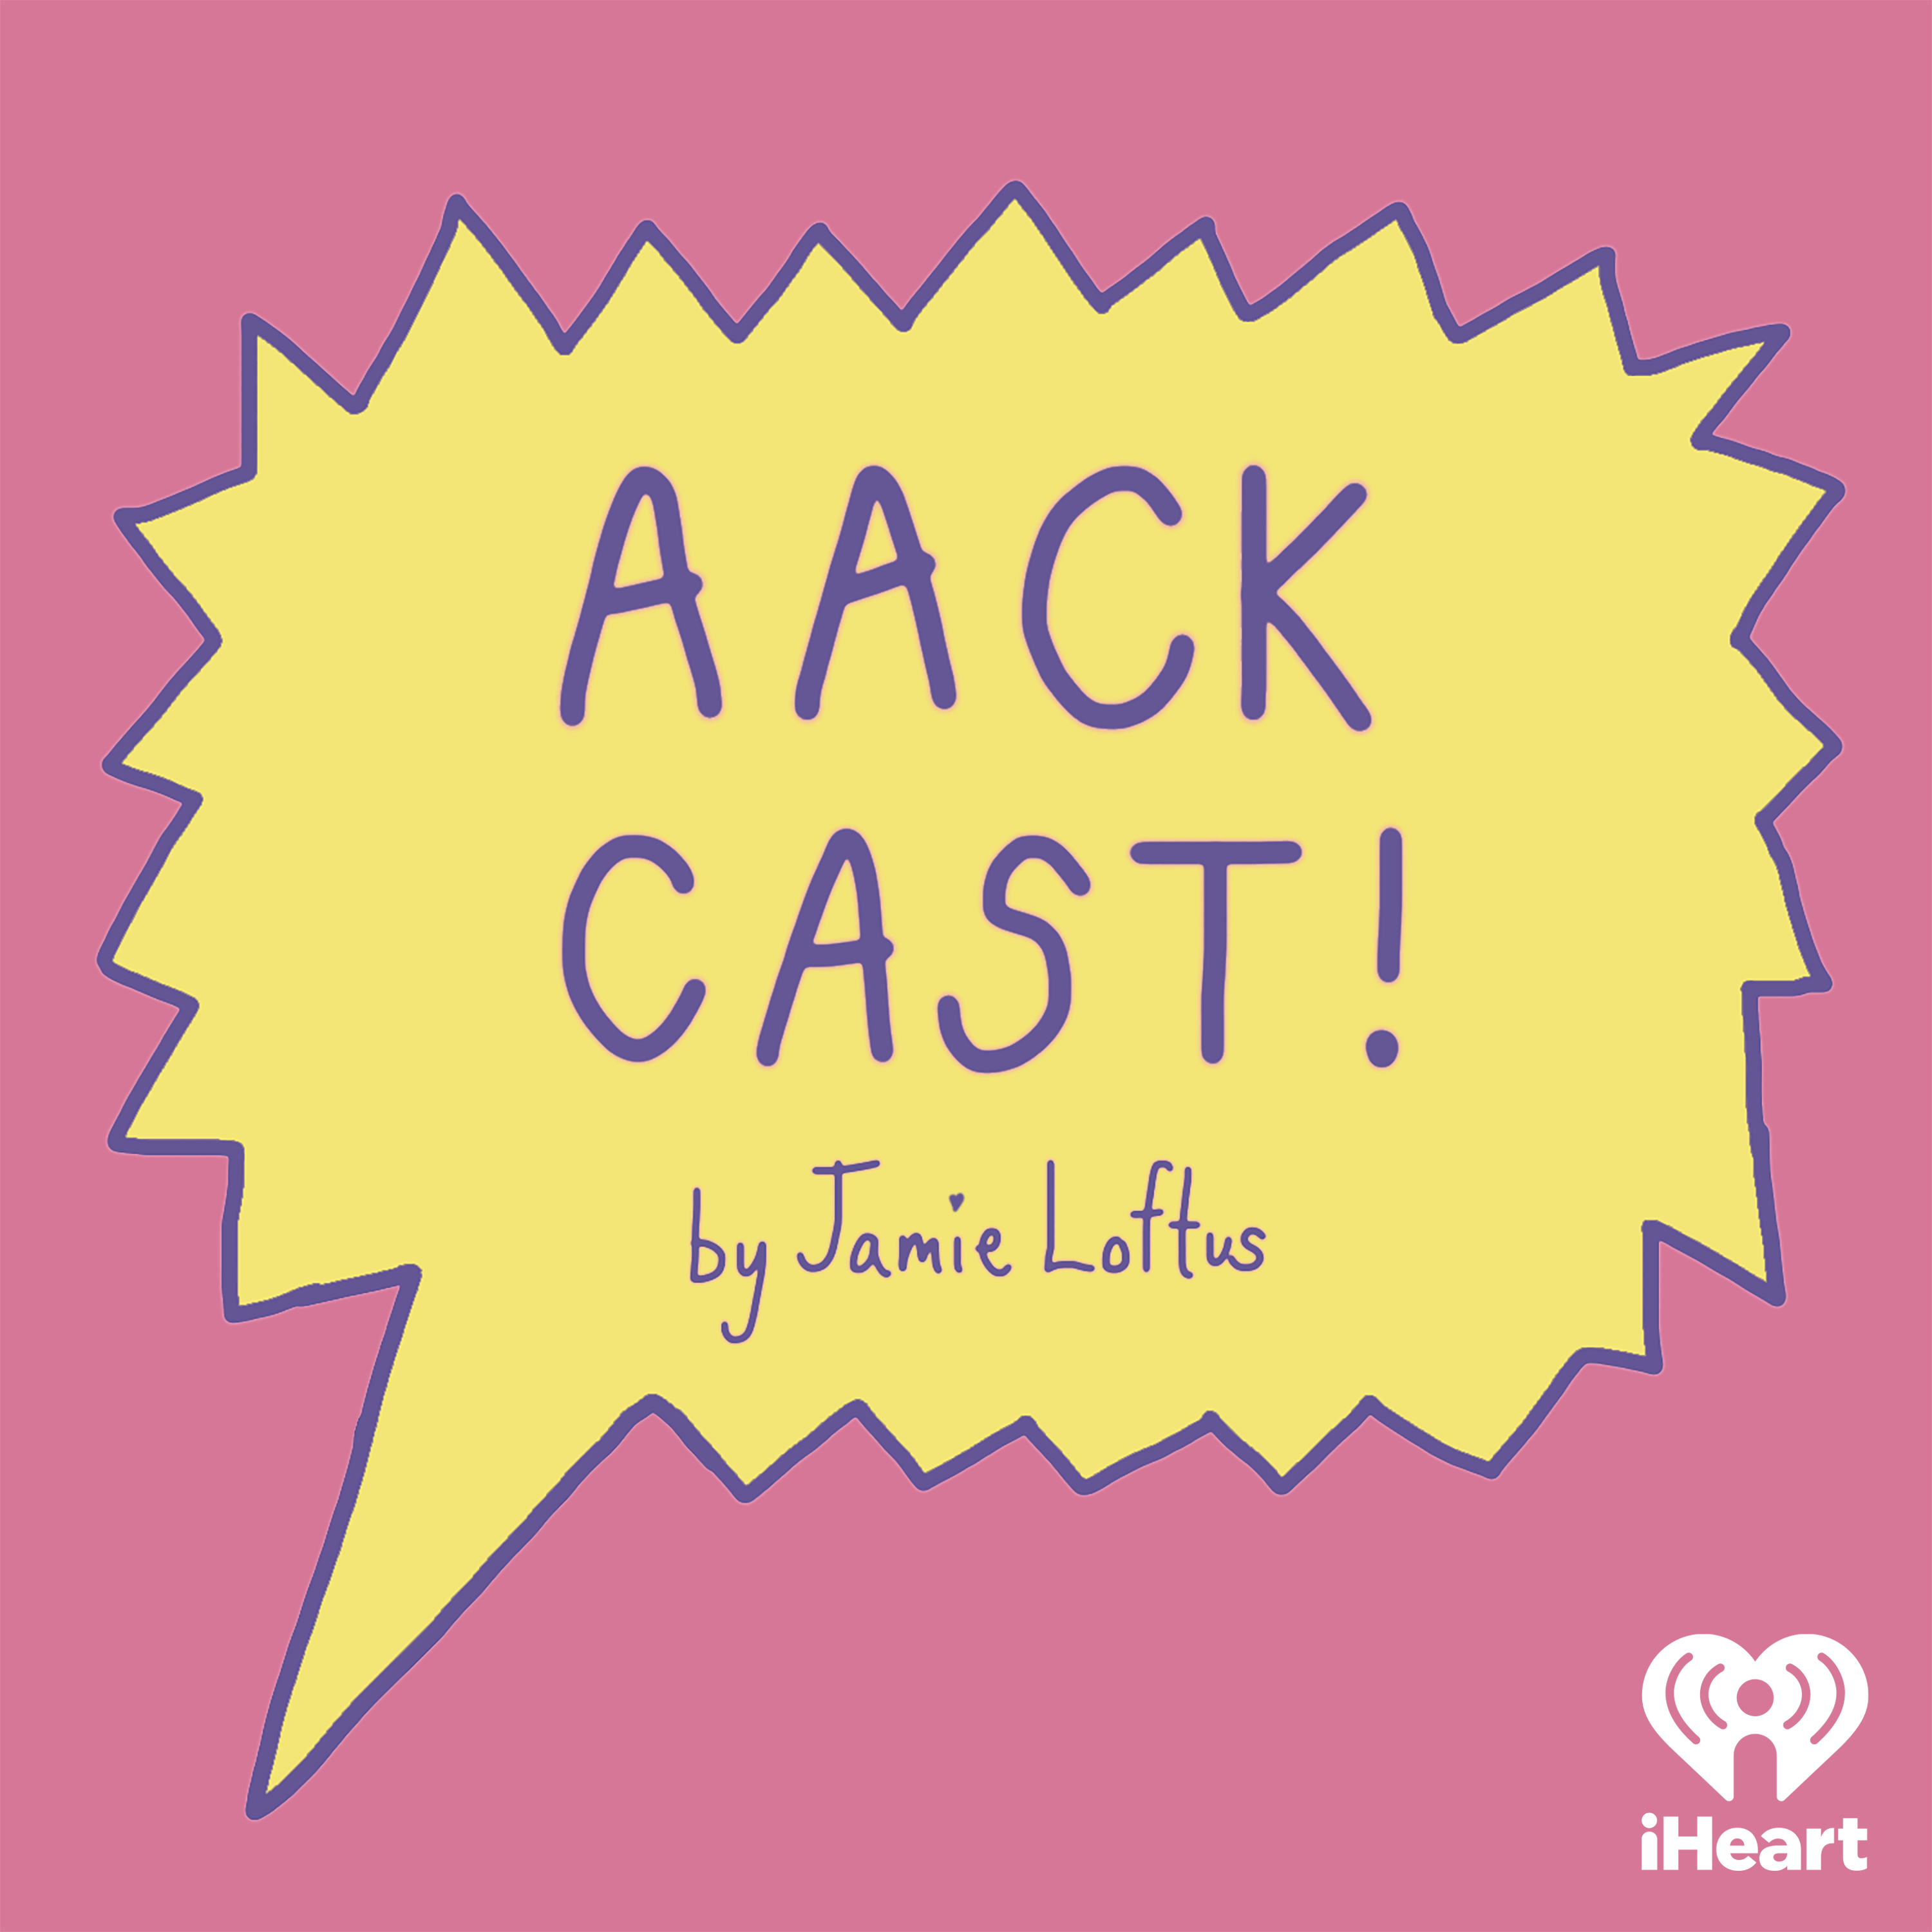 Introducing Aack Cast by Jamie Loftus